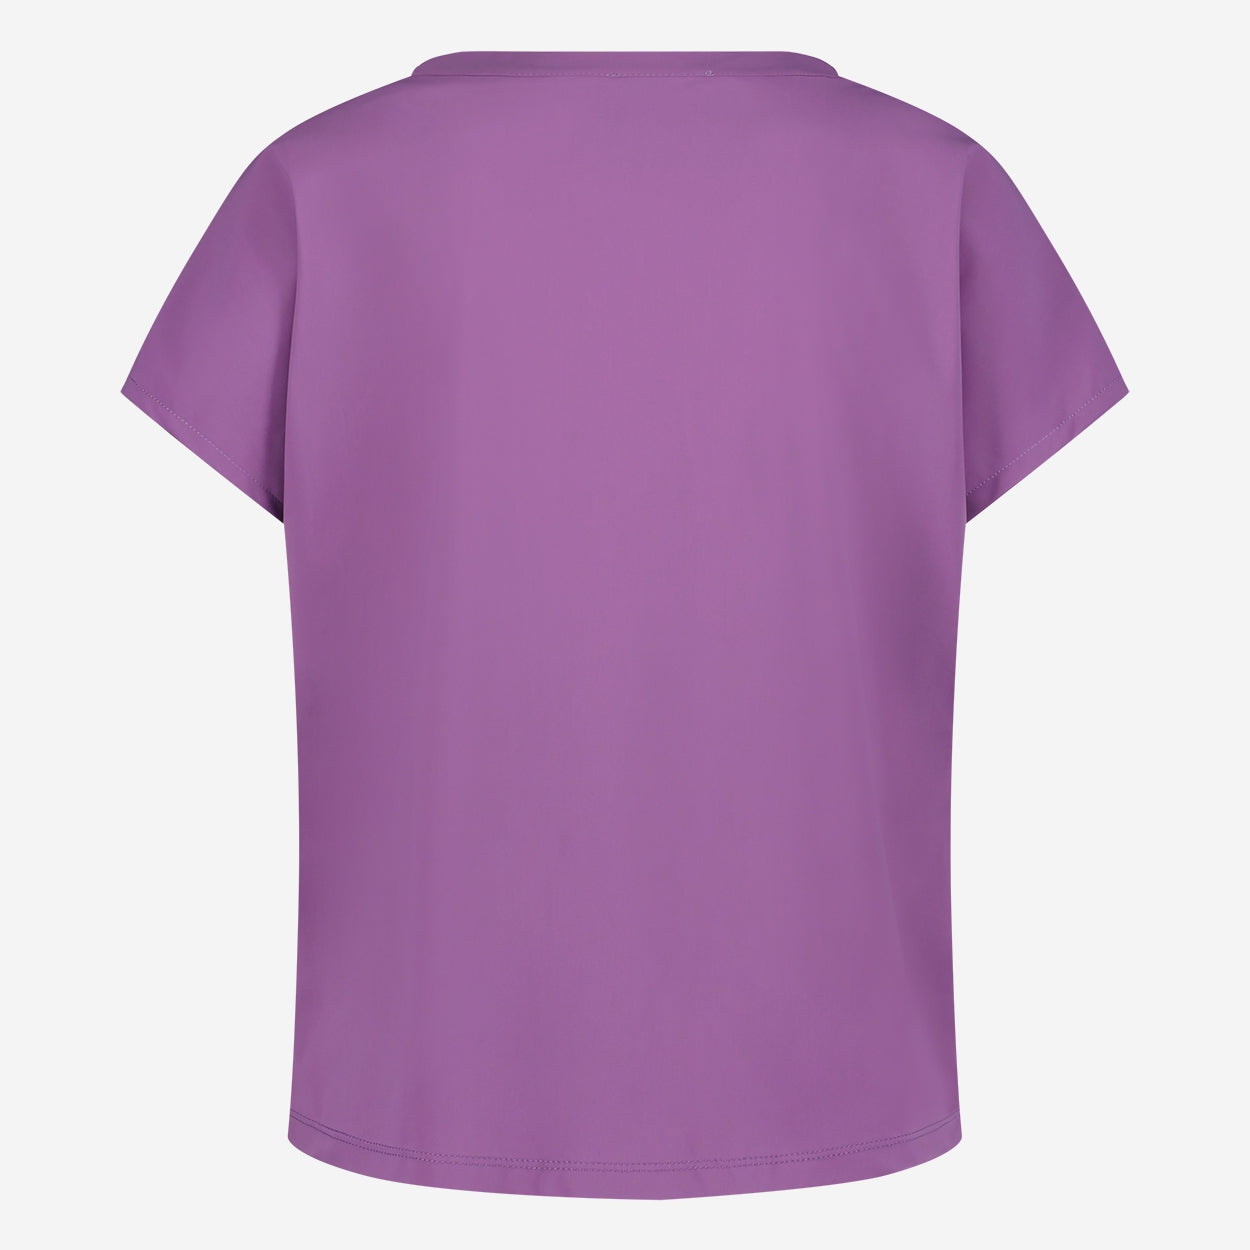 Remi Top Technical Jersey | Purple